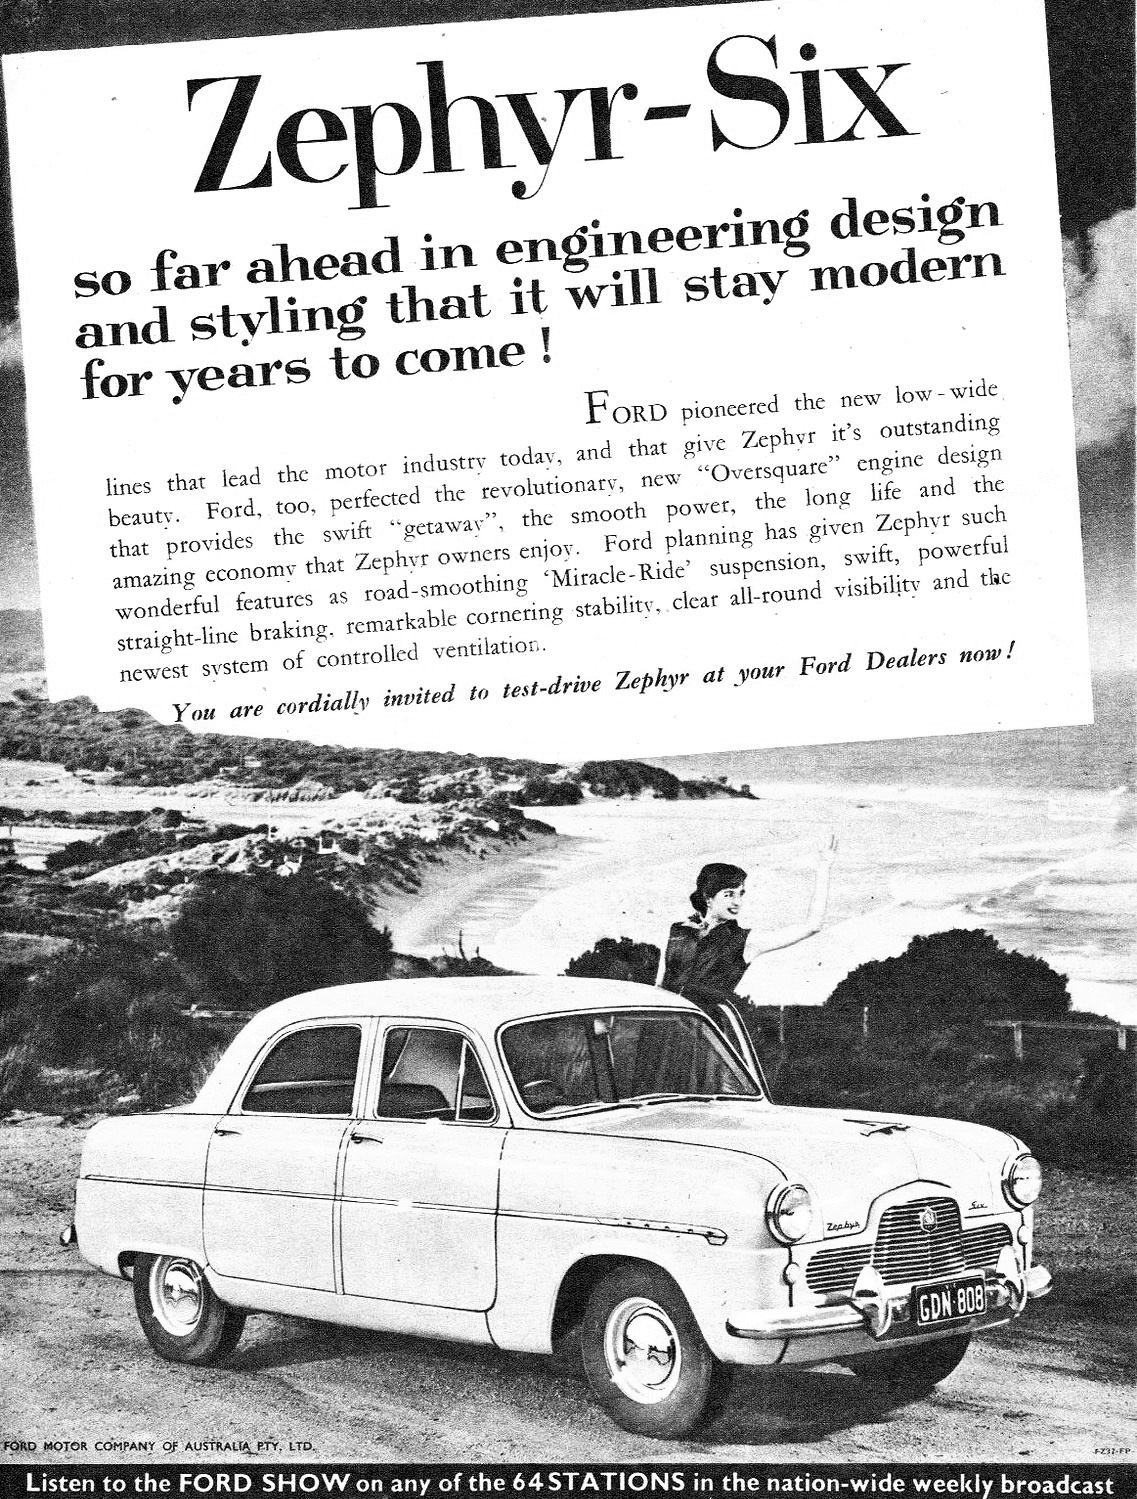 1955 Ford Zephyr Six